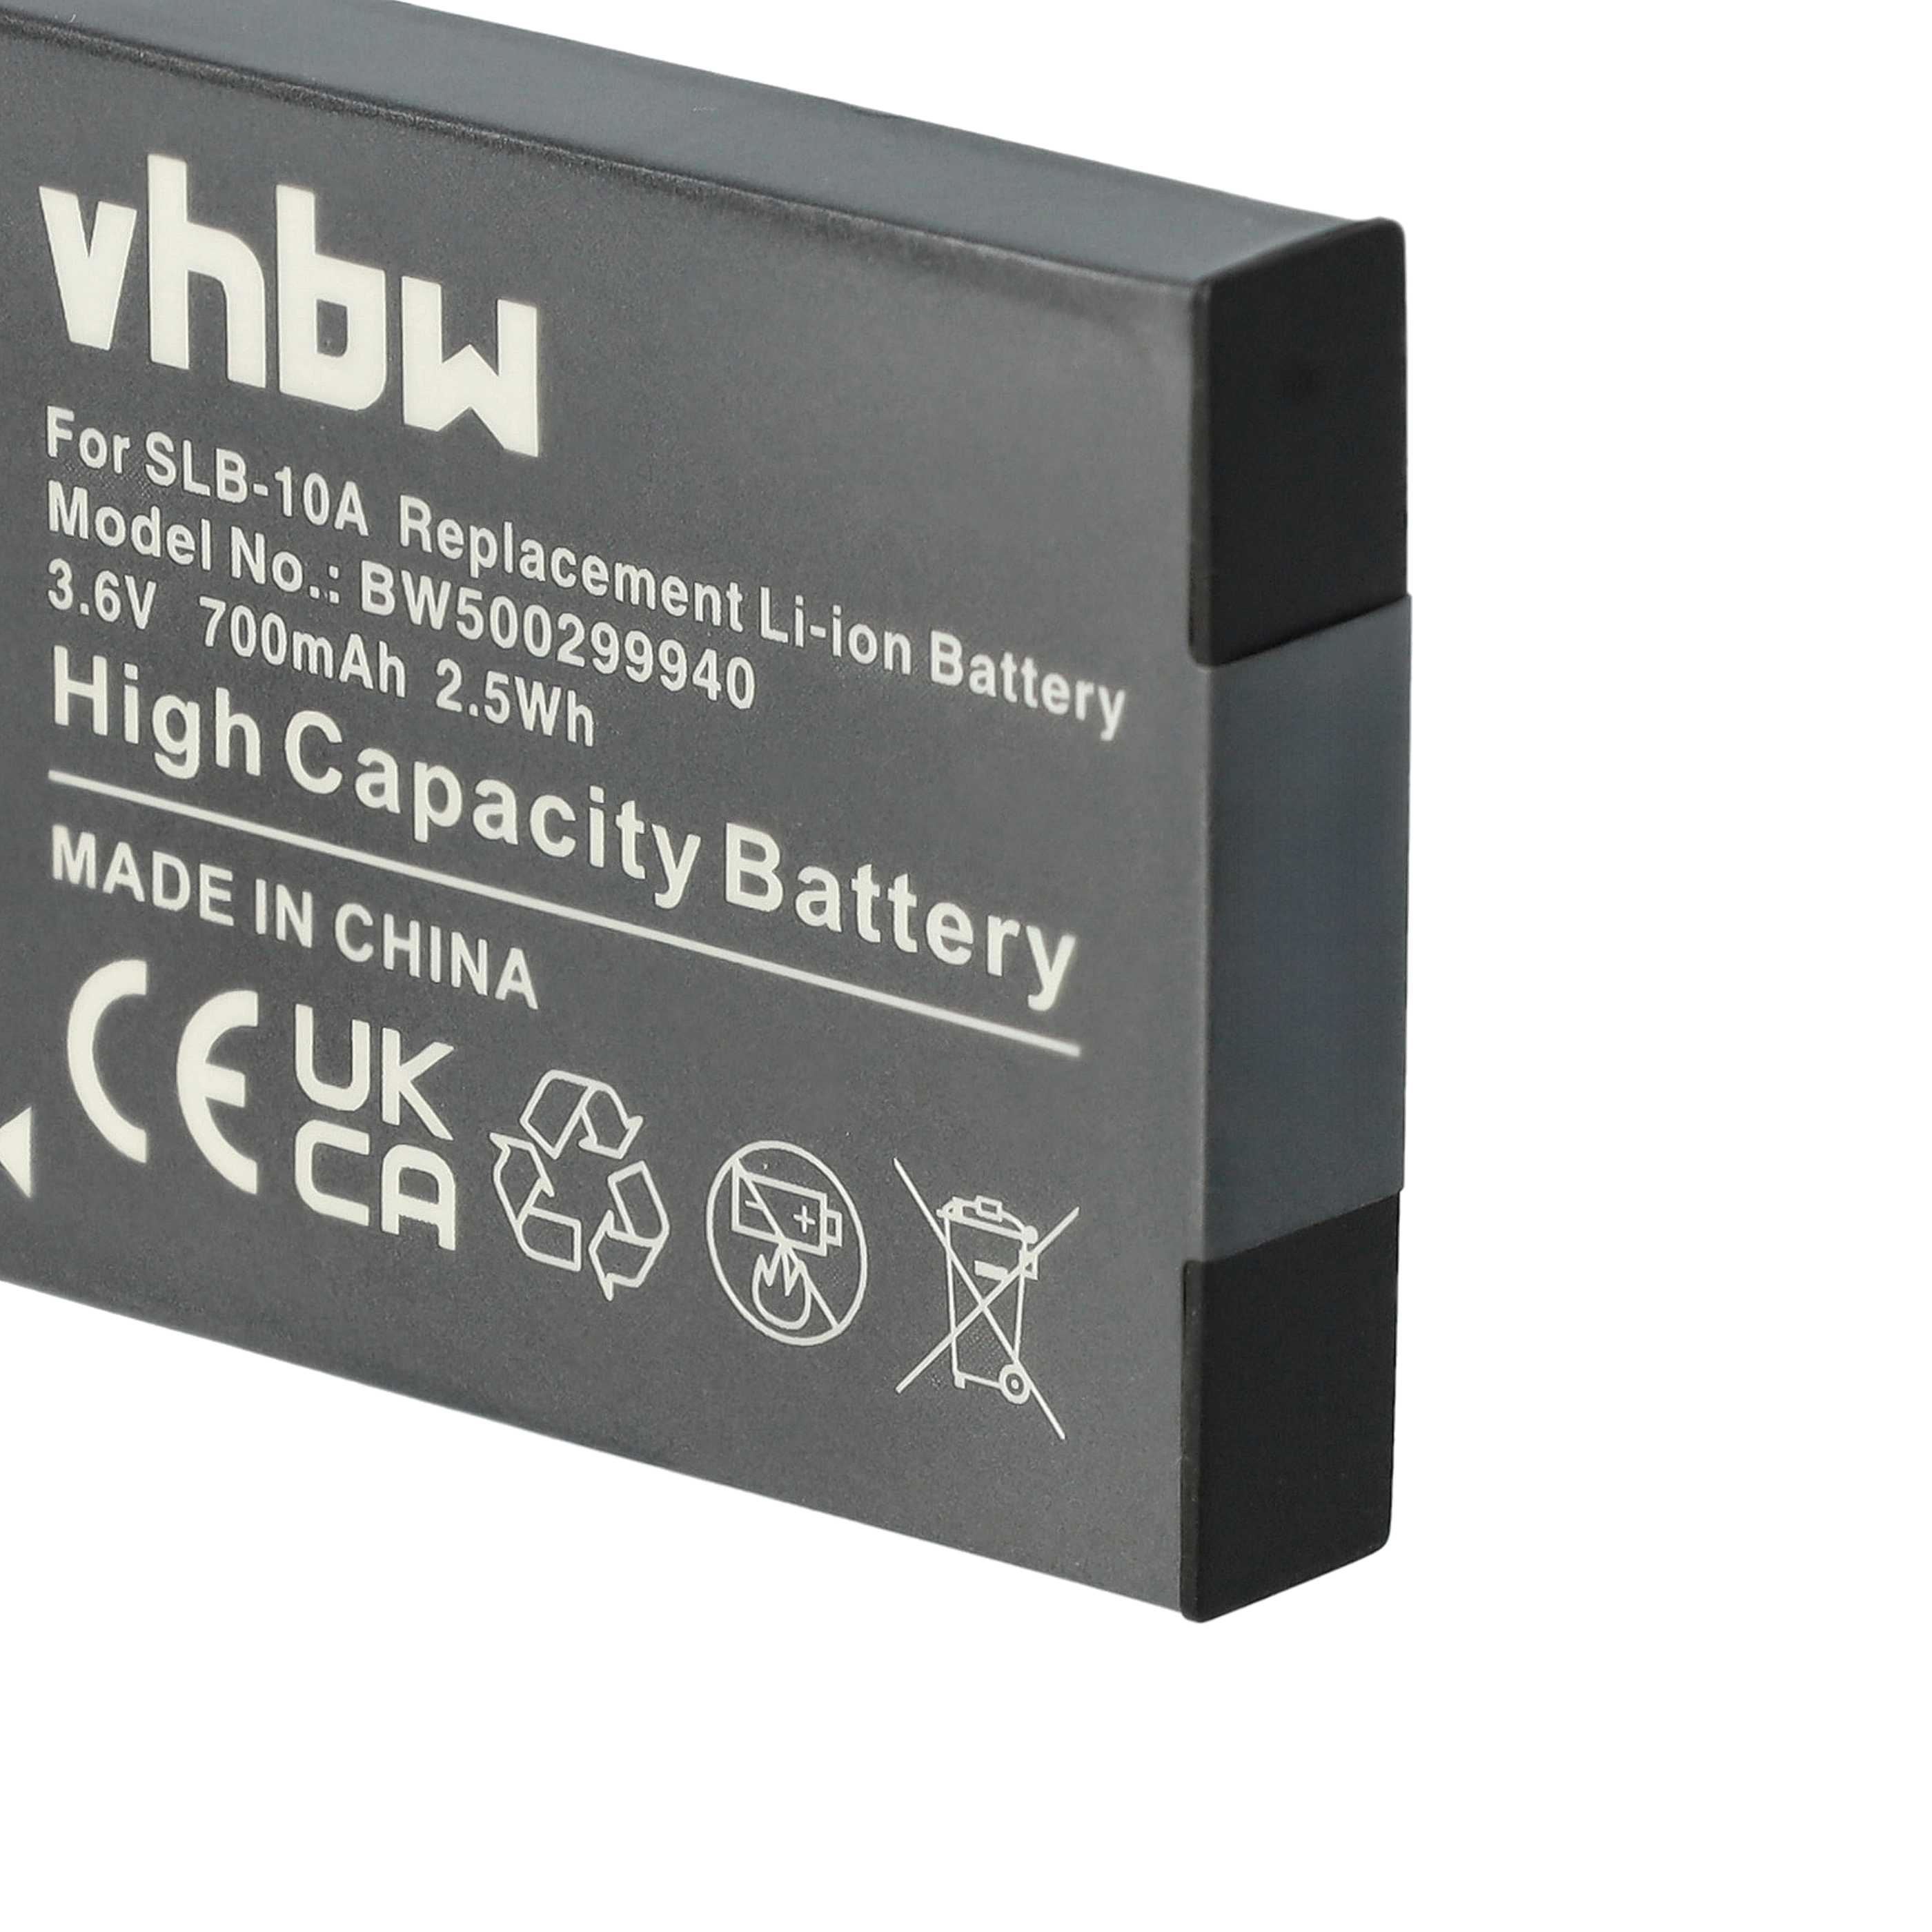 Batería reemplaza Samsung BP-10A, SLB-10A, BP10A para cámara Praktica - 700 mAh 3,6 V Li-Ion